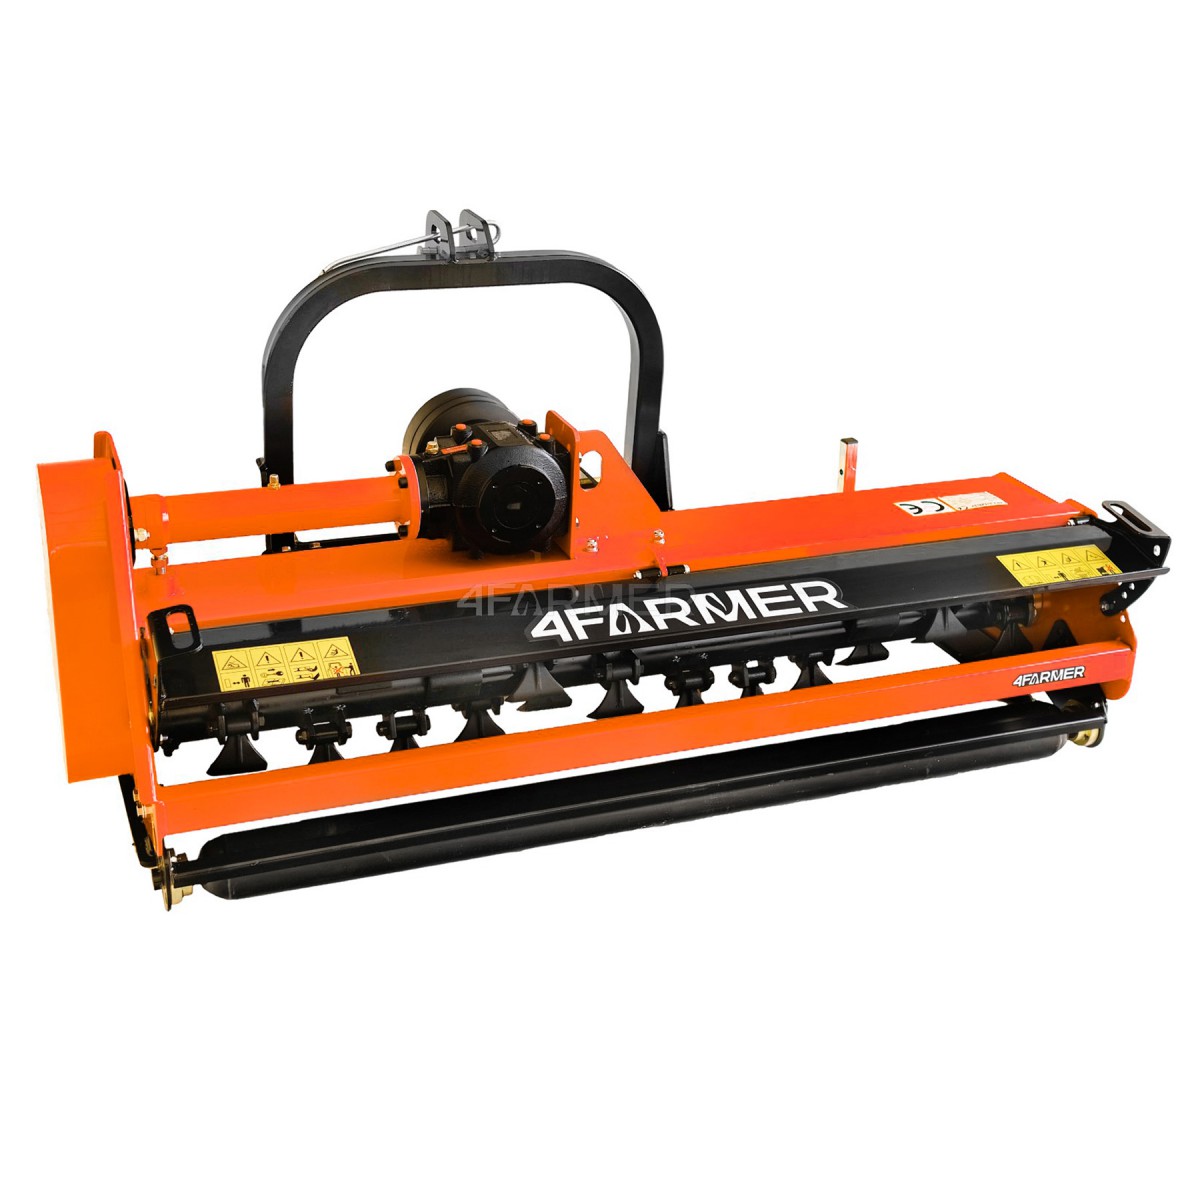 EFGC 165D 4FARMER flail mower - orange